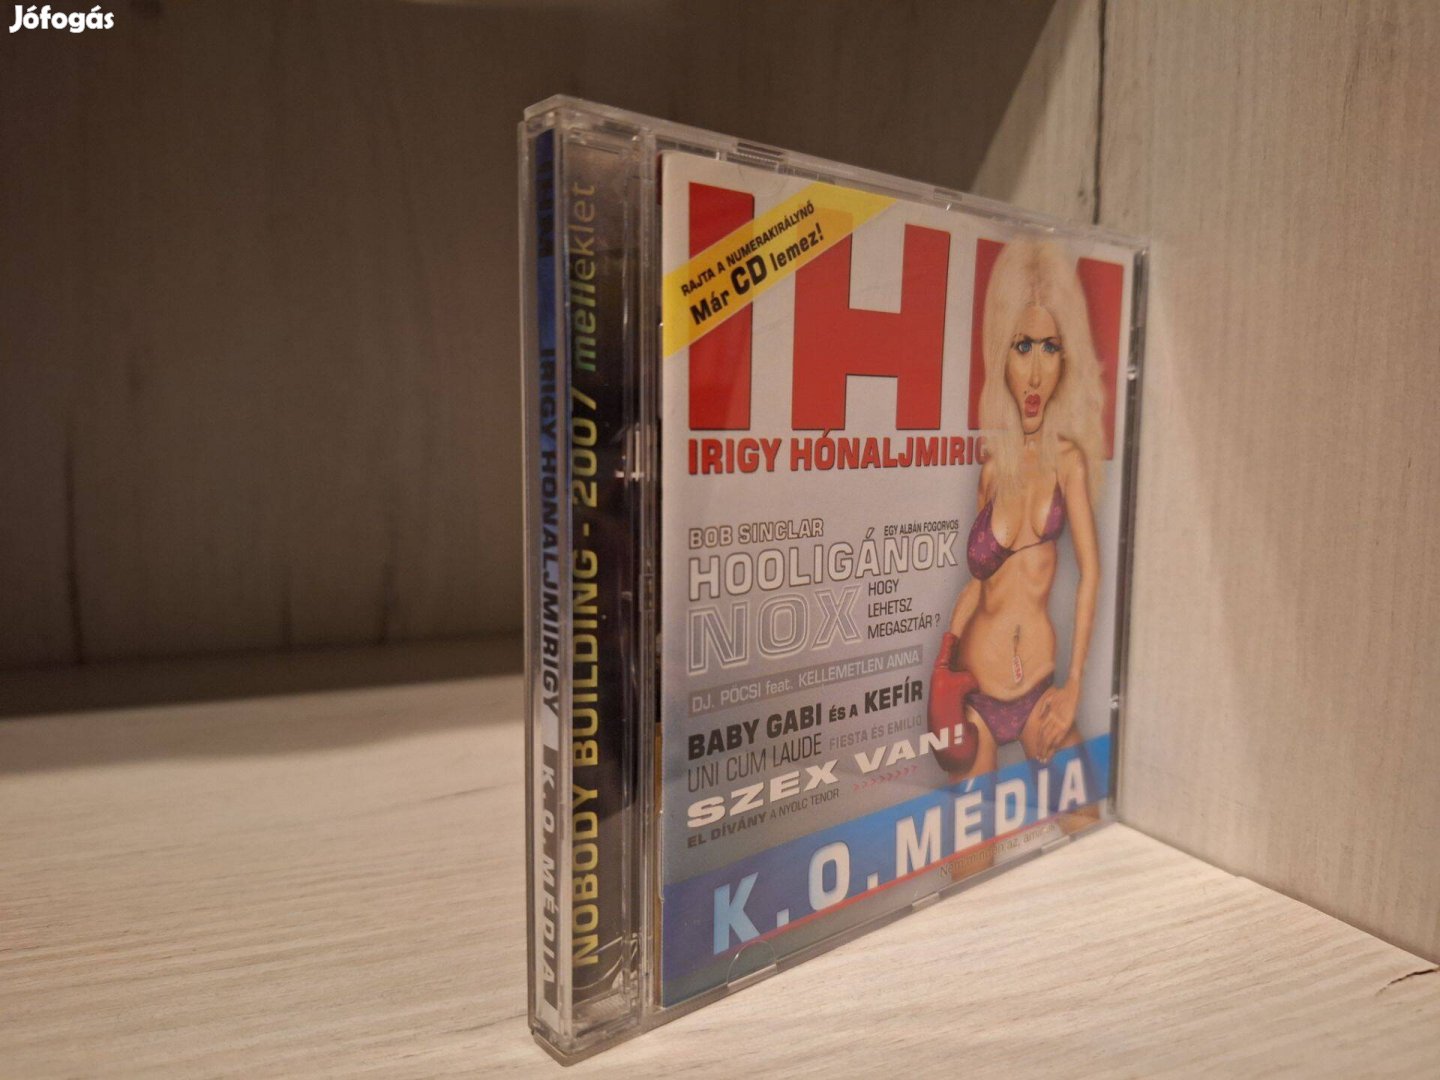 Irigy Hónaljmirigy - K.O.Média CD